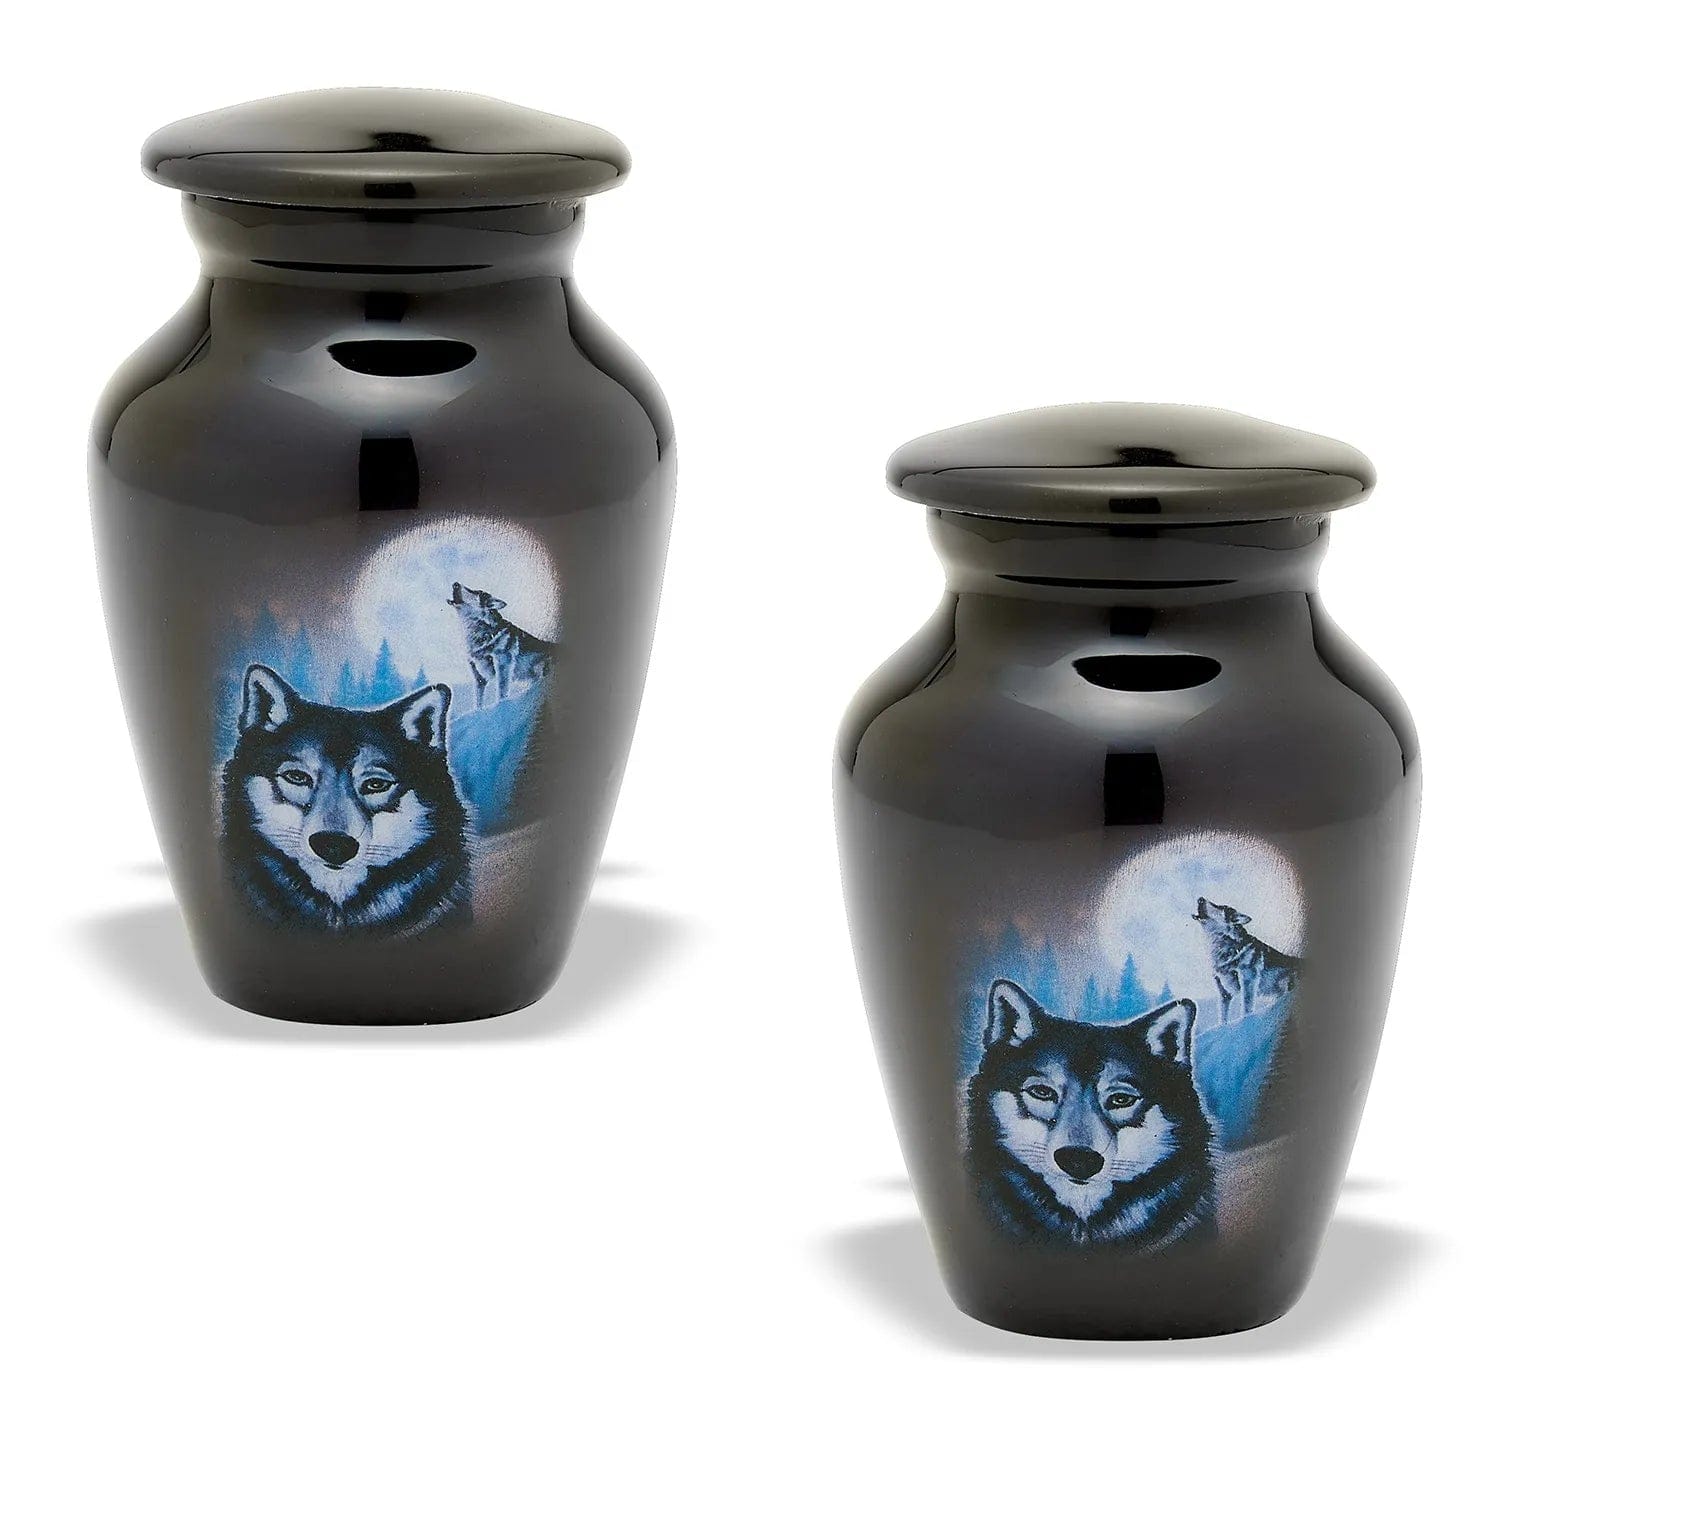 Pair of Keepsake Urns - Full Moon Wolf | Artist Pet Keepsake Urn